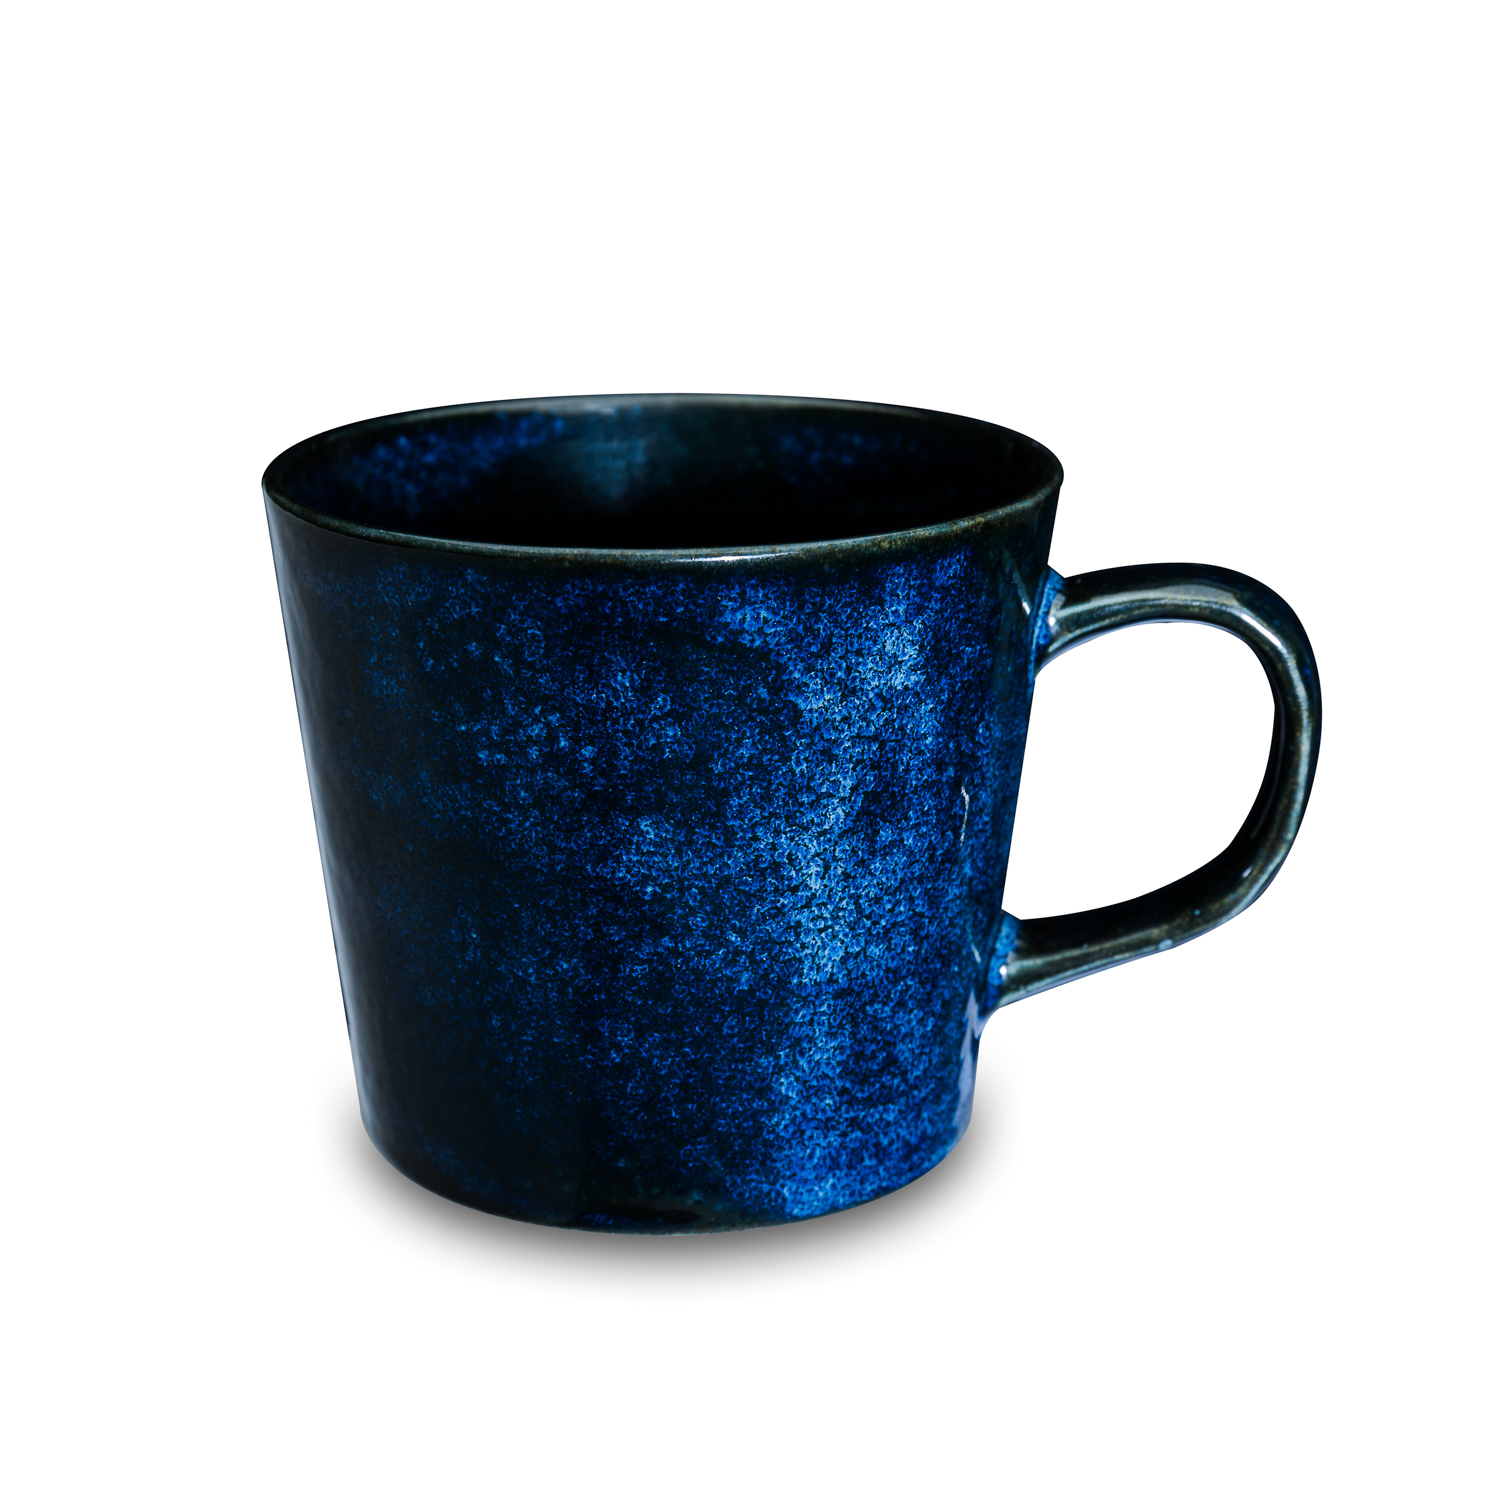 日本原产AITO Natural color美浓烧陶瓷摩登色马克杯 蓝色